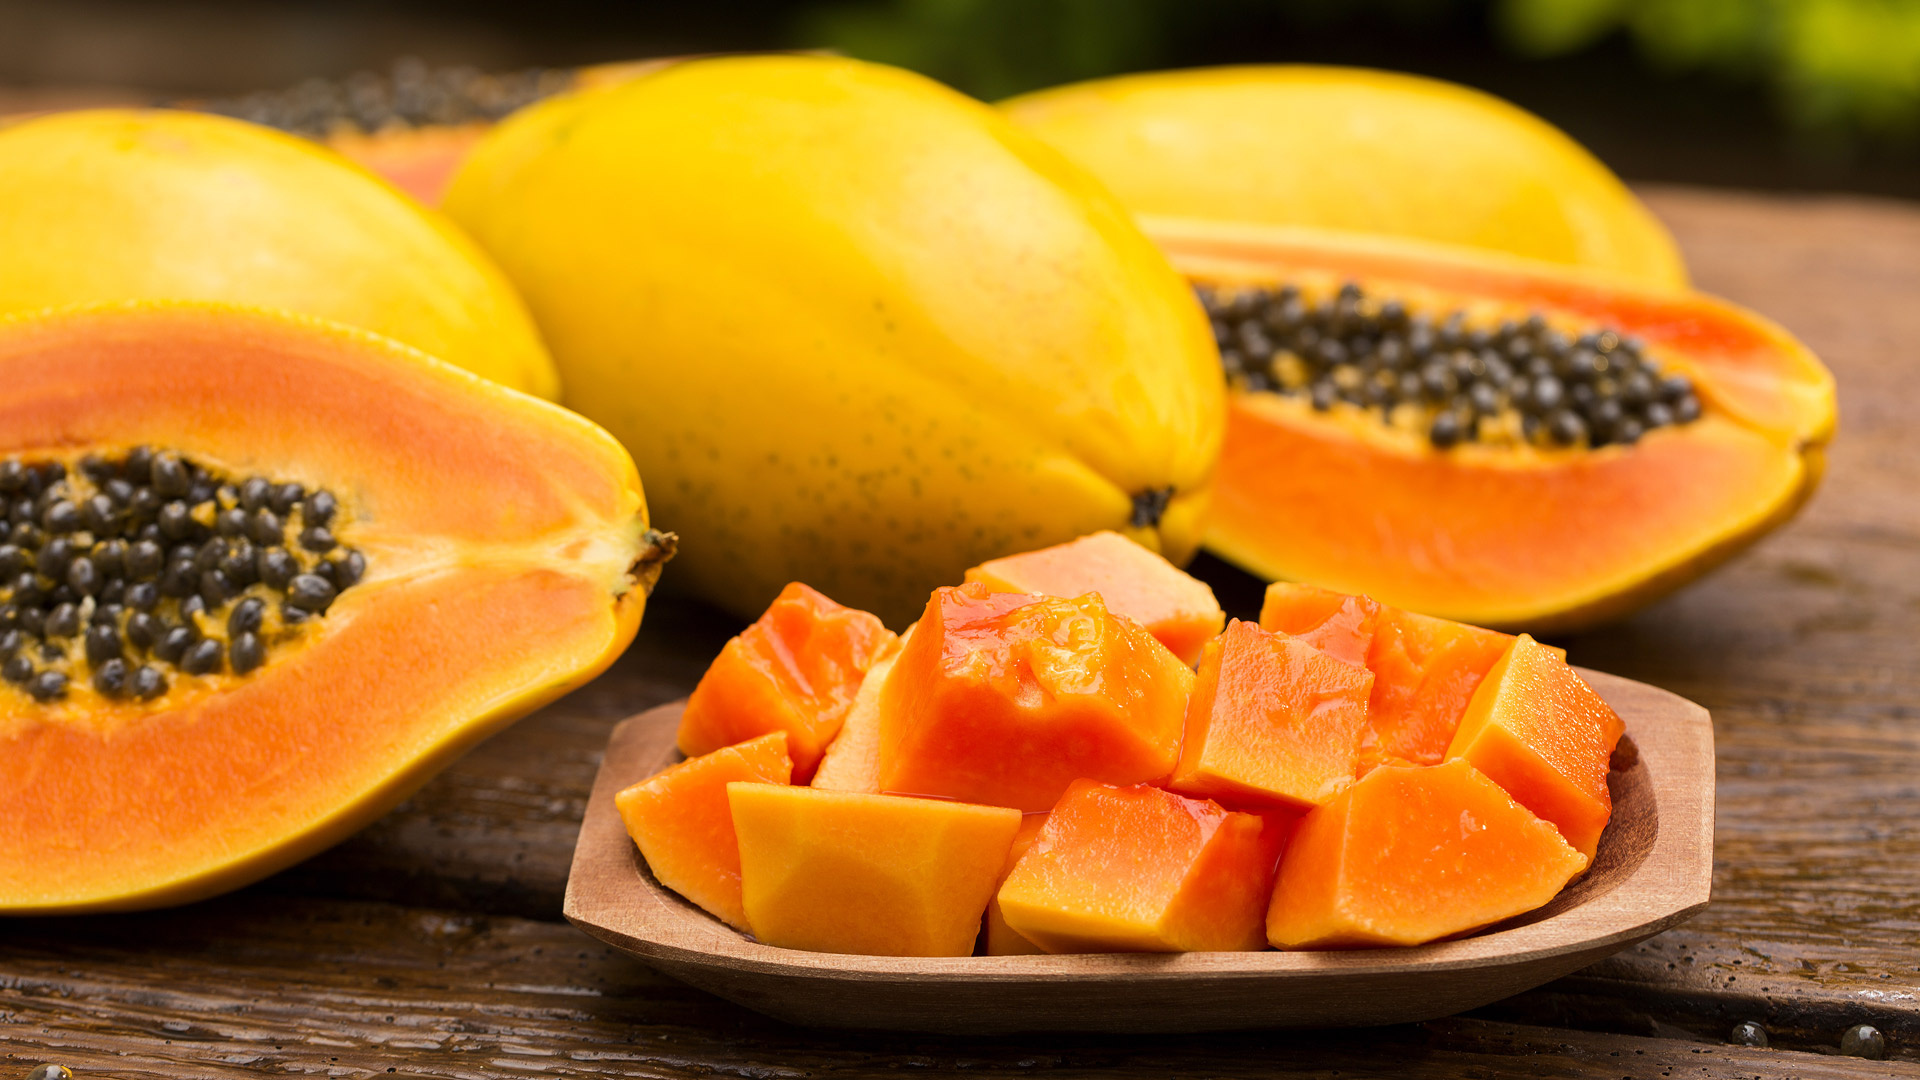 Papaya: A large oval fruit with a yellowish skin and sweet orange flesh. 1920x1080 Full HD Background.